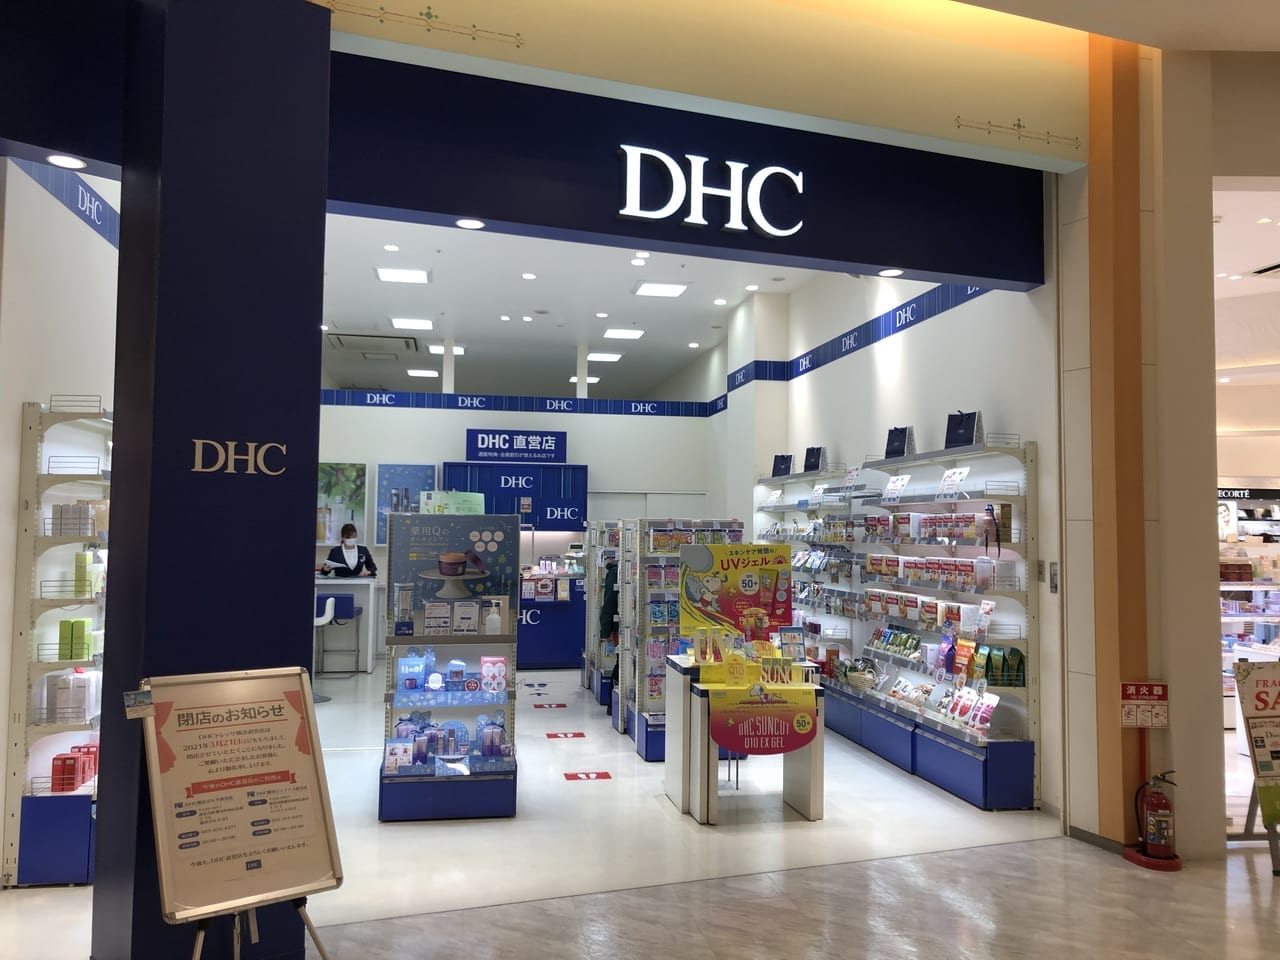 DHCトレッサ横浜直営店